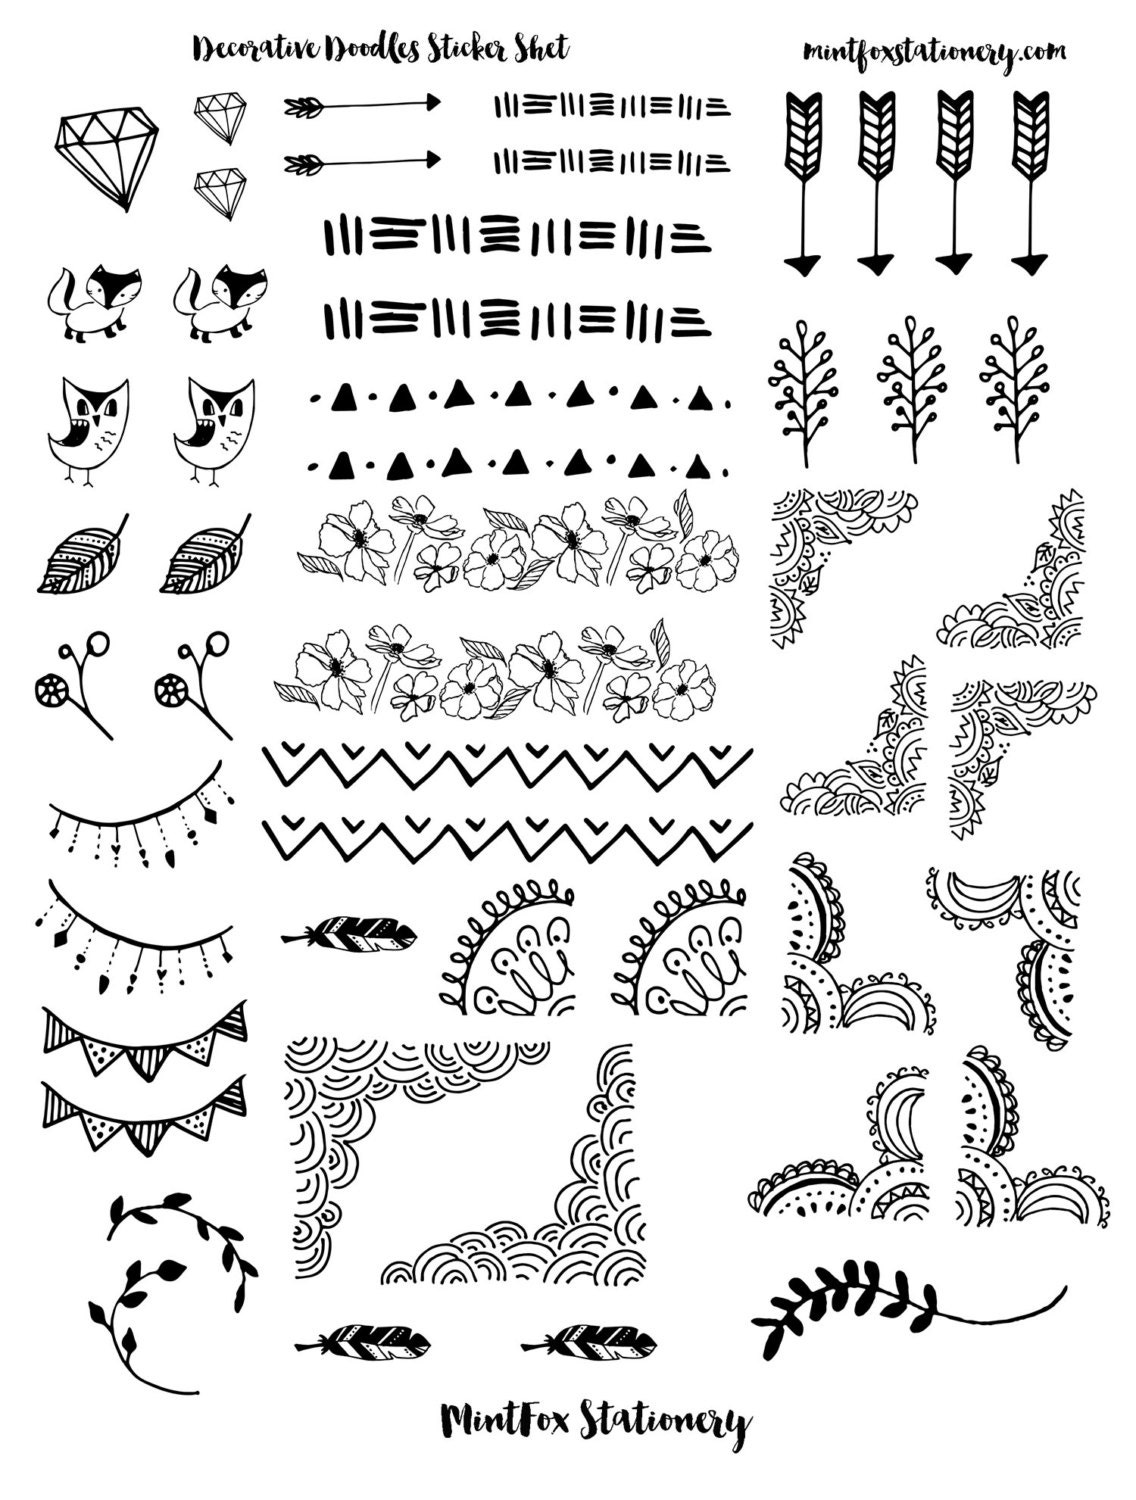 Decorative Doodles Printable Sticker Sheet PDF Bullet Journal